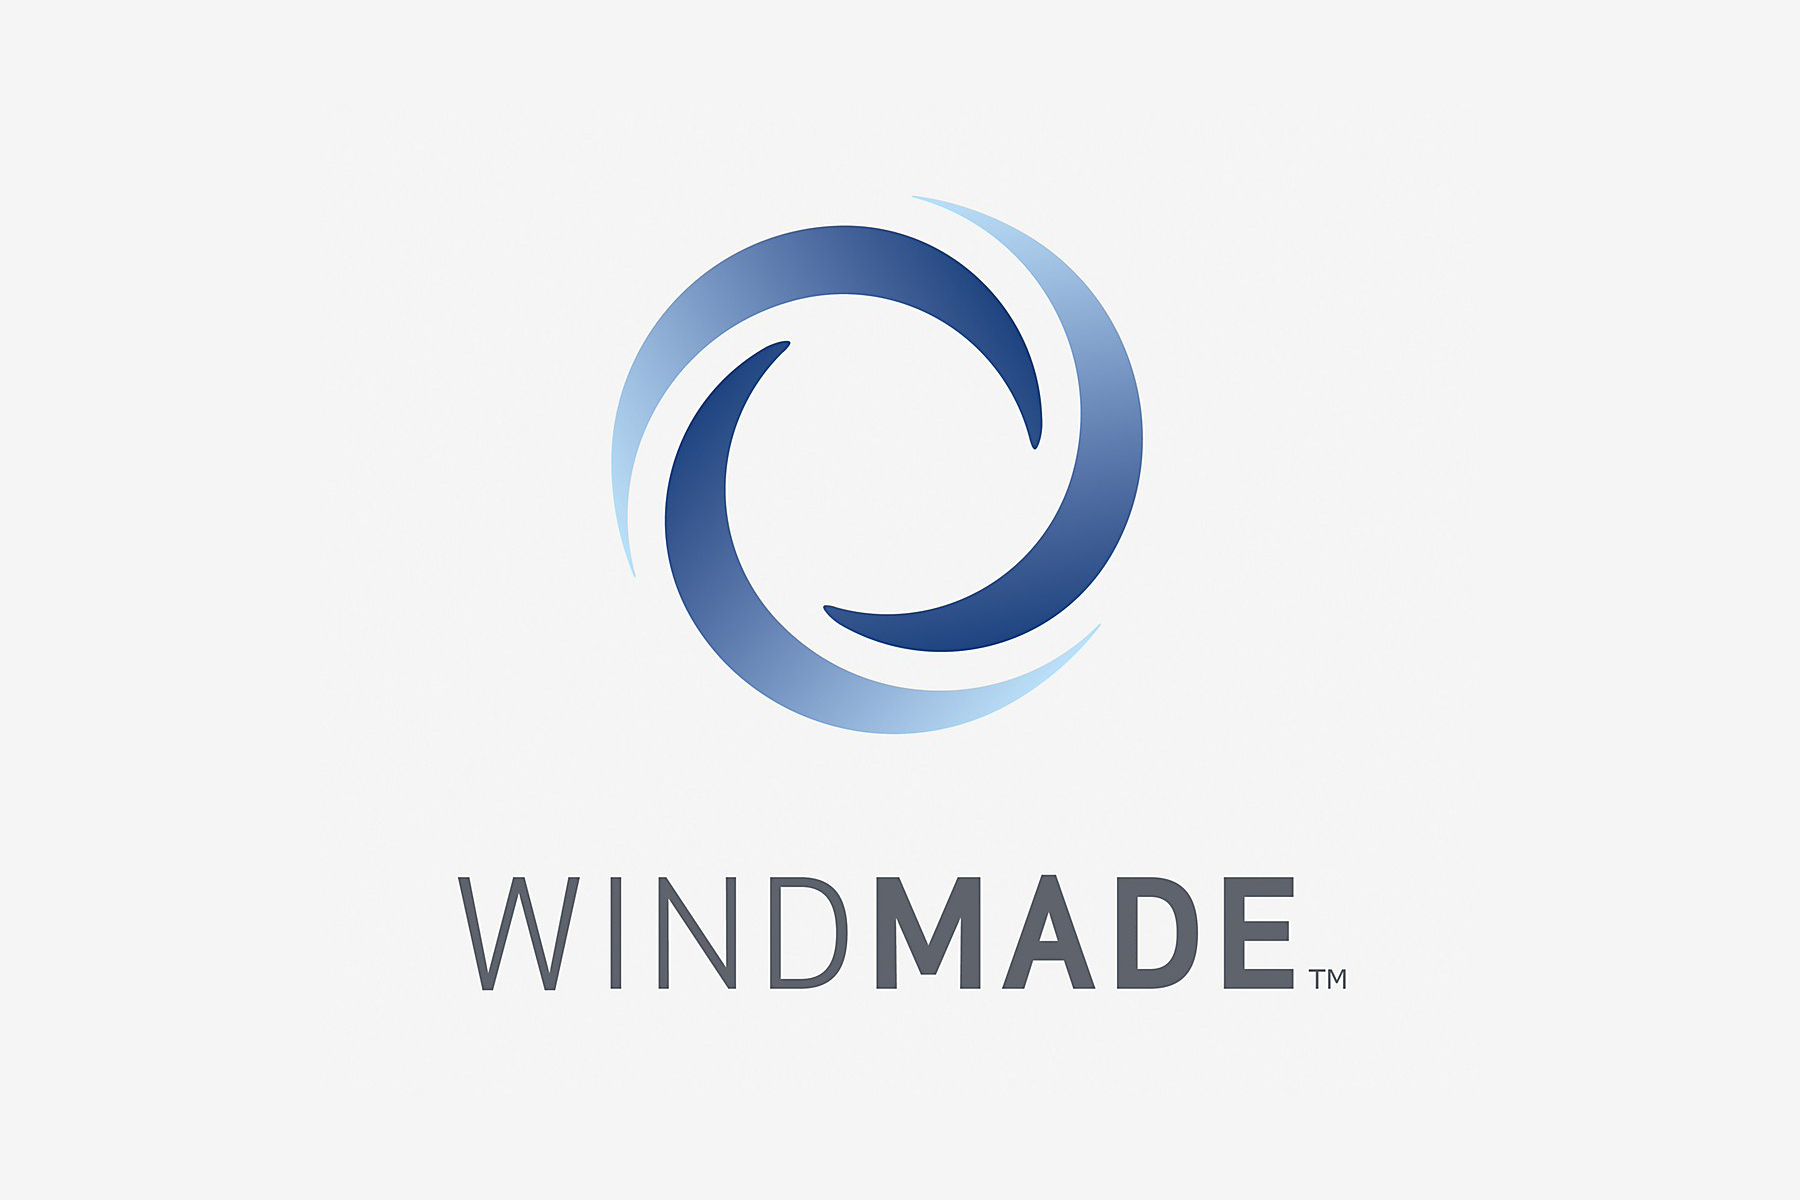 New Windmade logo design